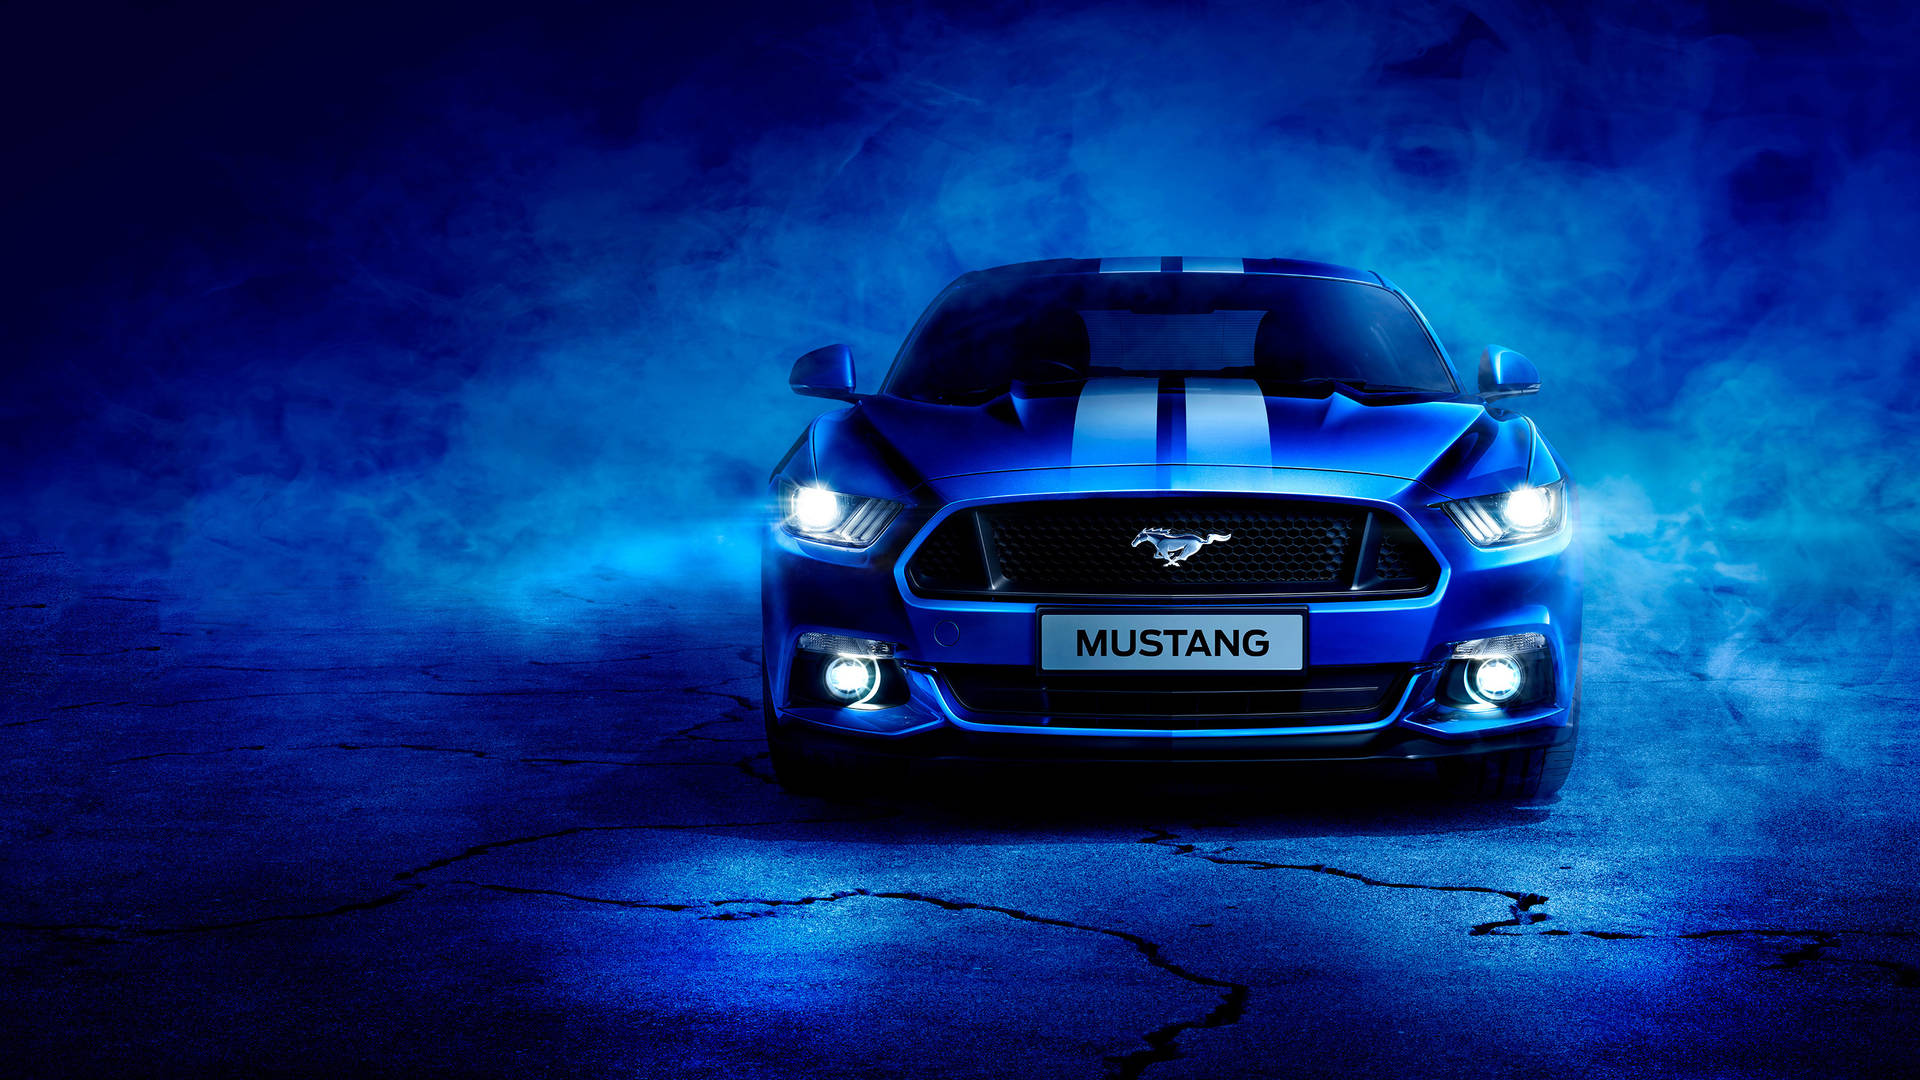 Mustang In Blue Fog Wallpaper